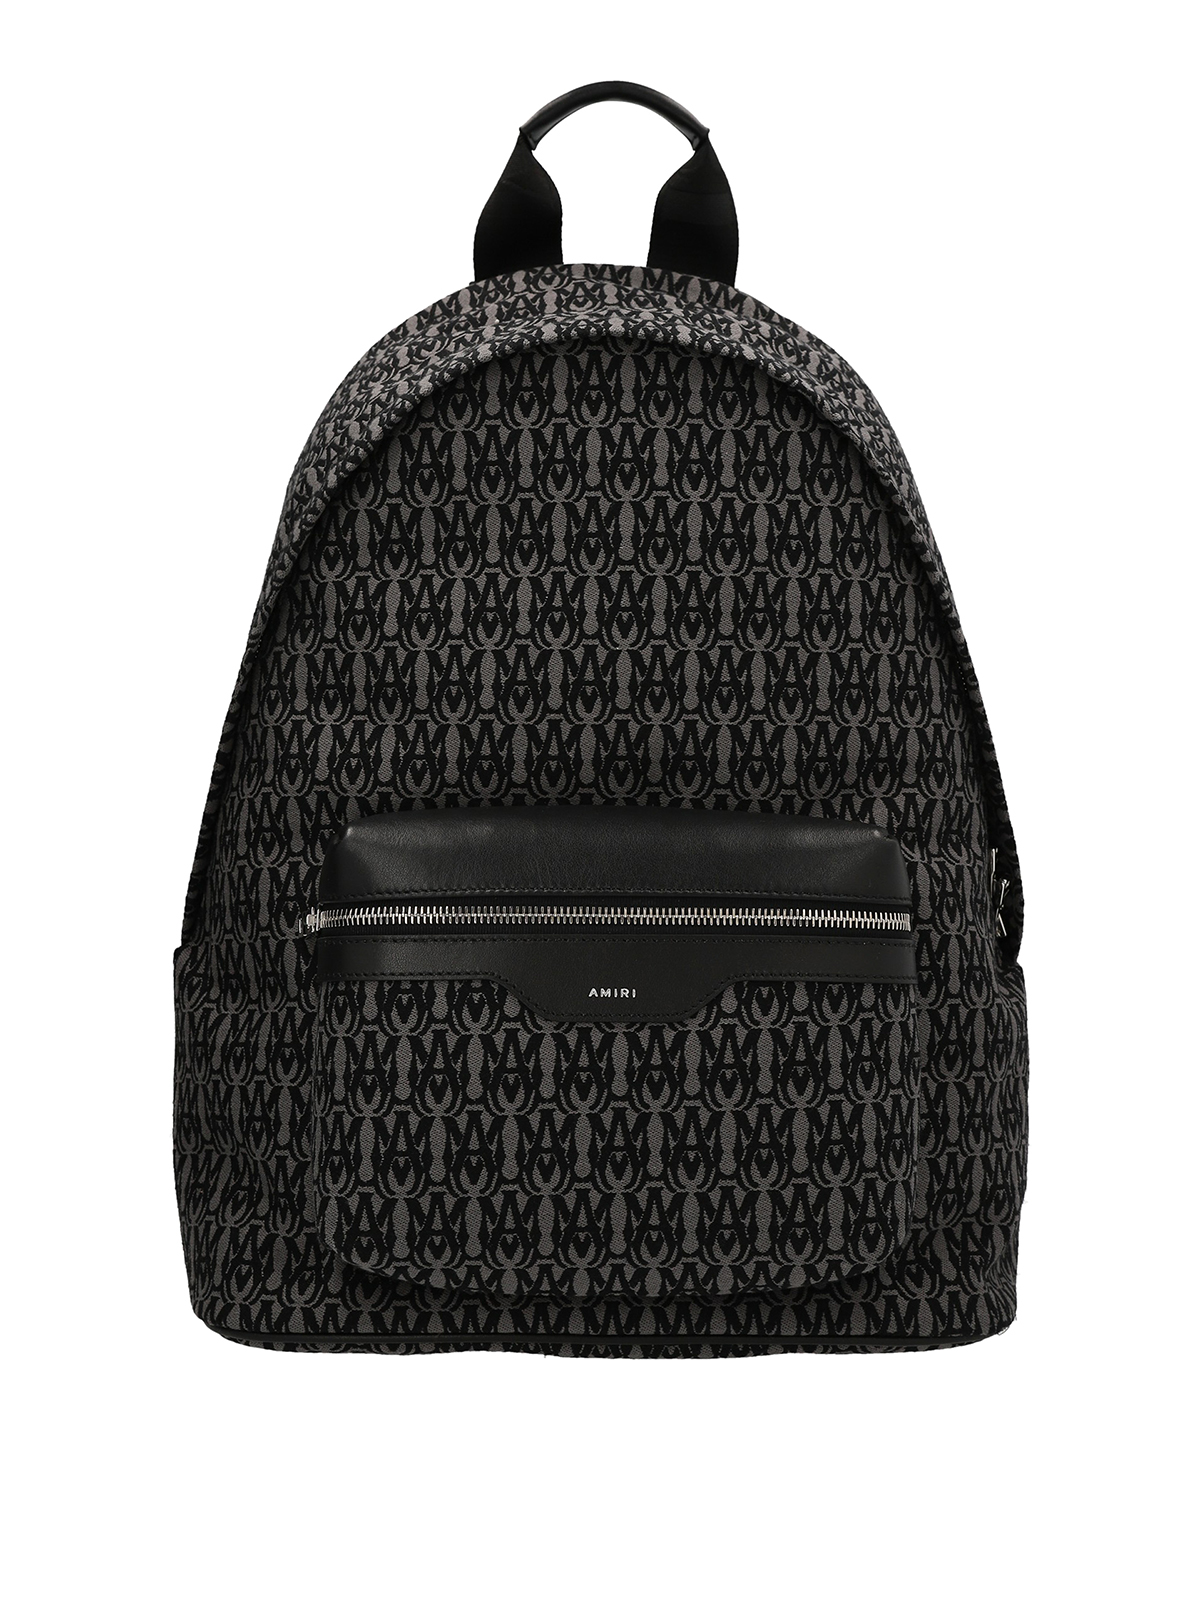 Emporio Armani Jacquard Black Backpack